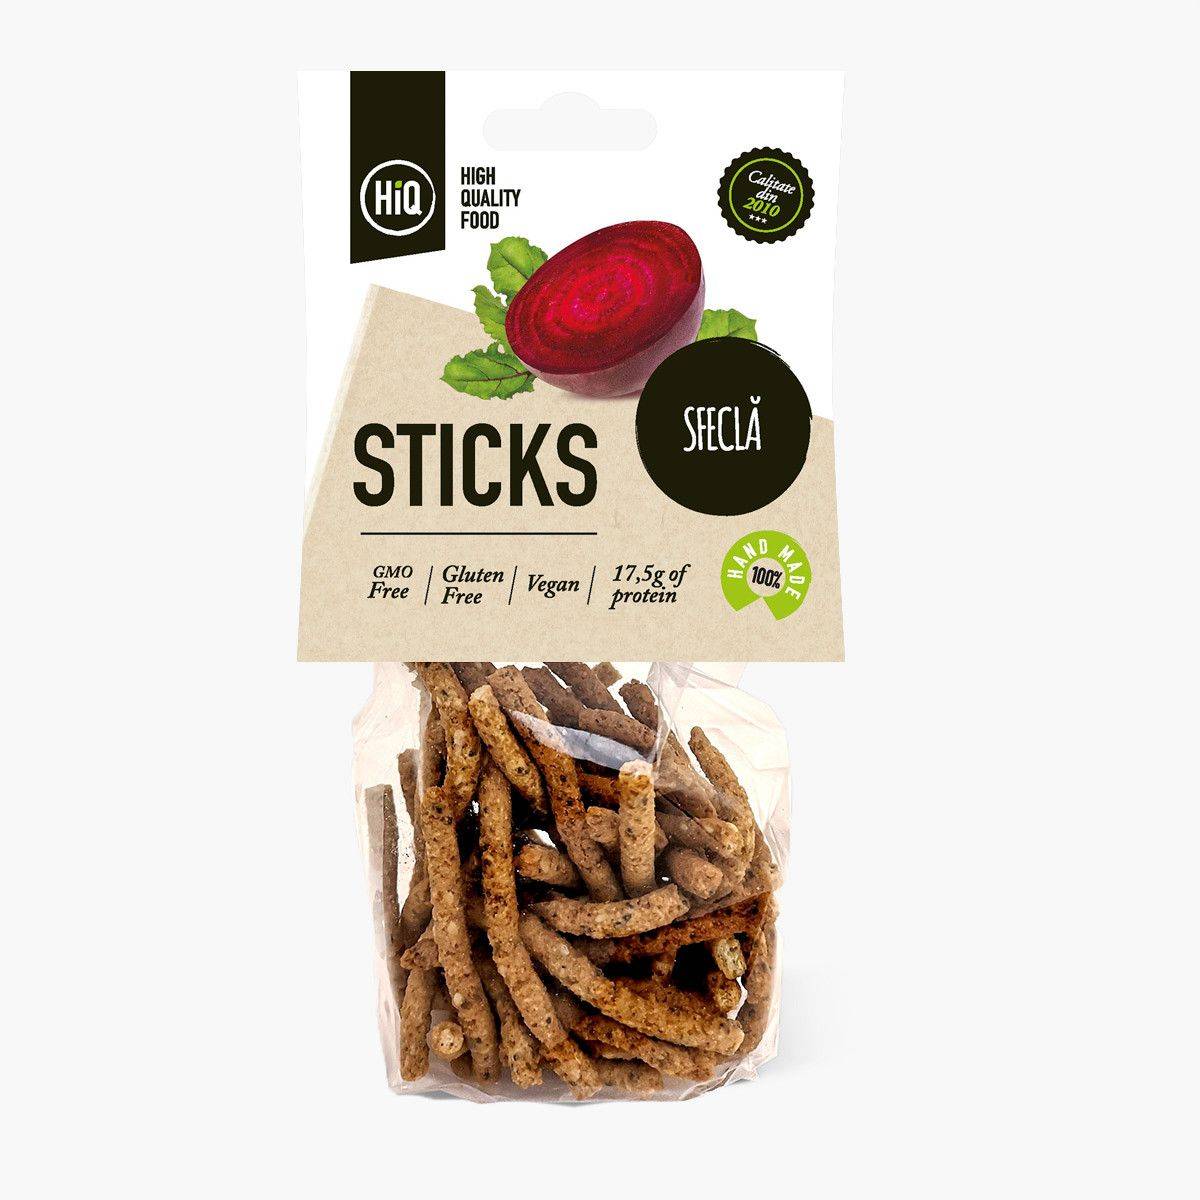 Sticks sfecla proteic vegan 70g, yes chips